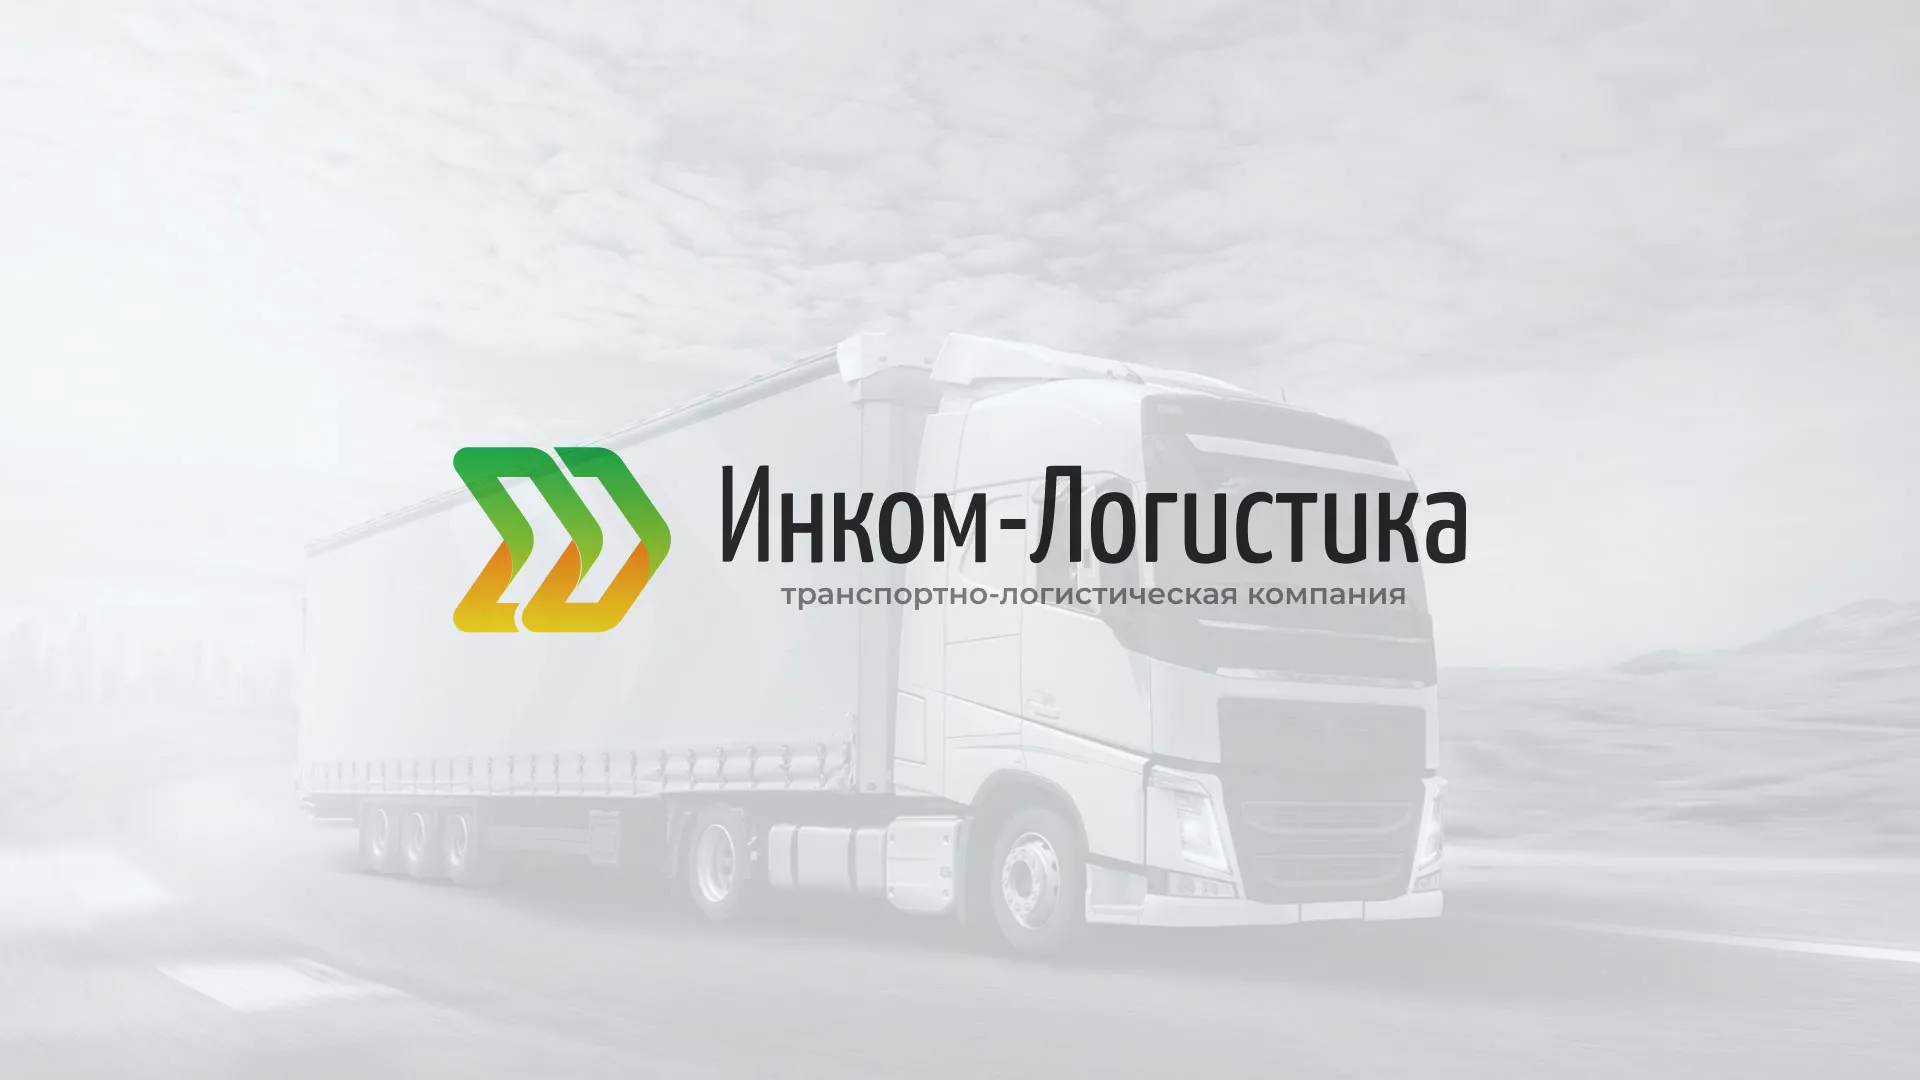 Разработка логотипа и сайта компании «Инком-Логистика» в Ижевске